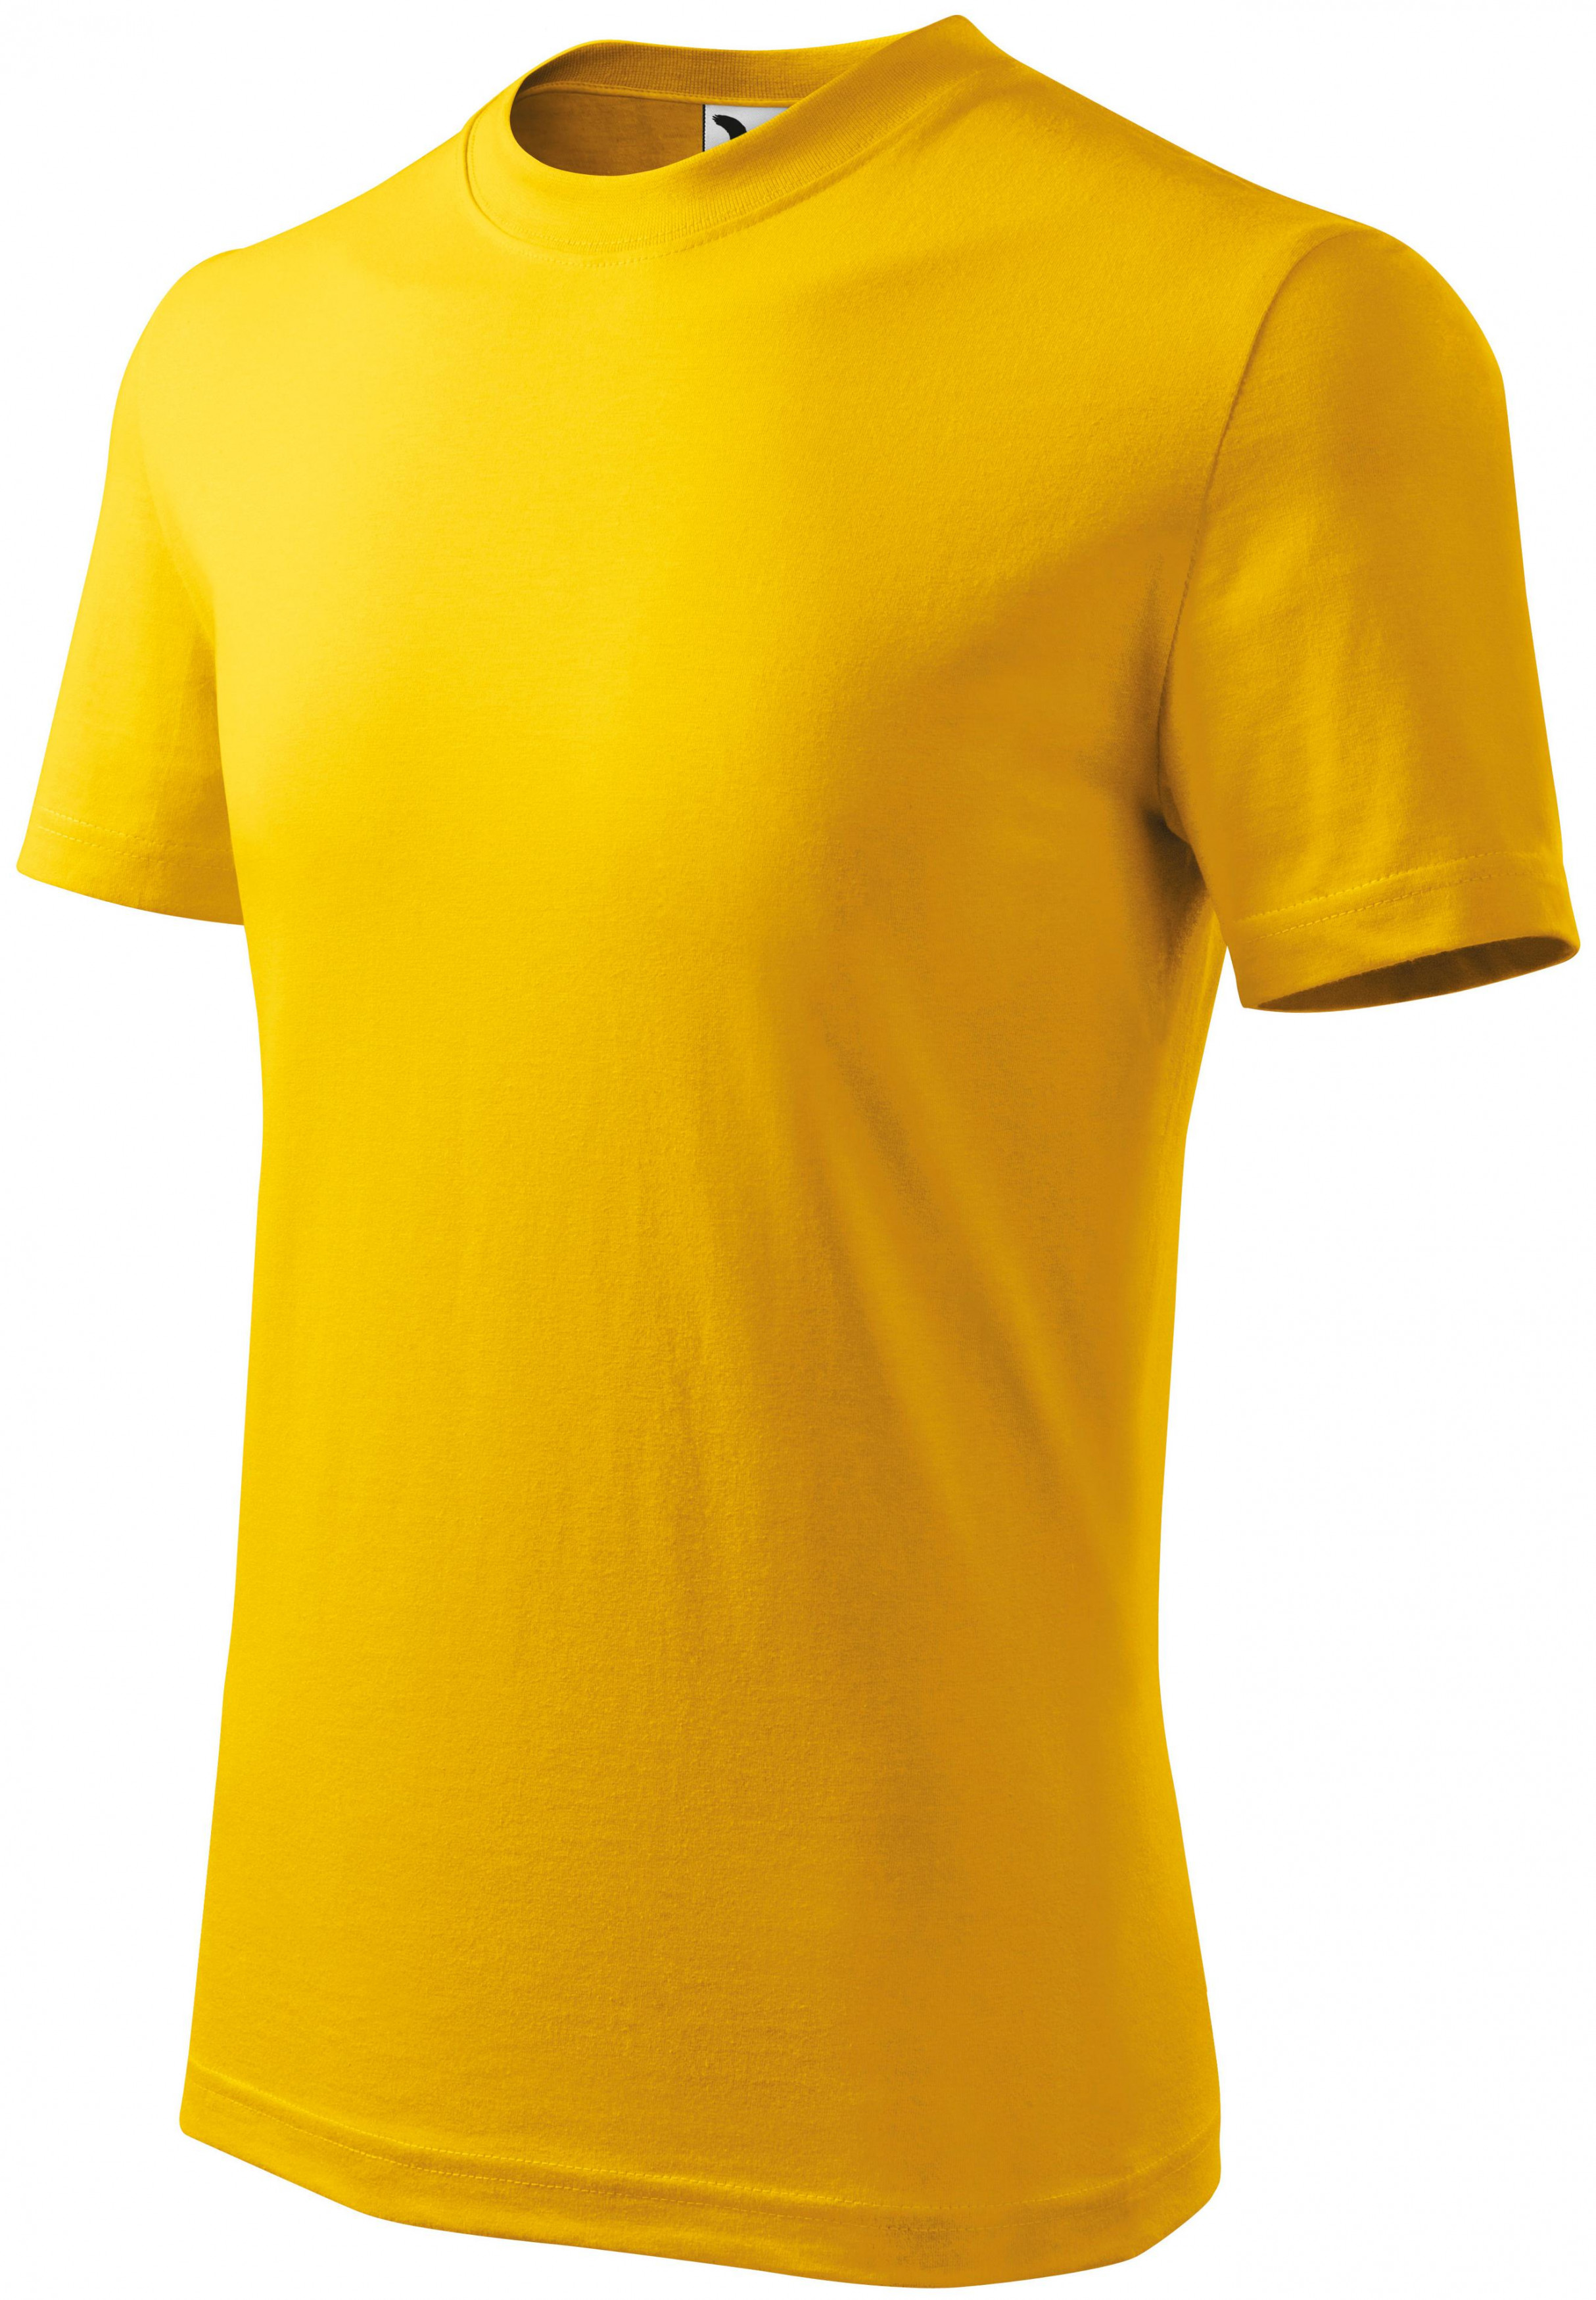 Detské tričko klasické, žltá, 110cm / 4roky